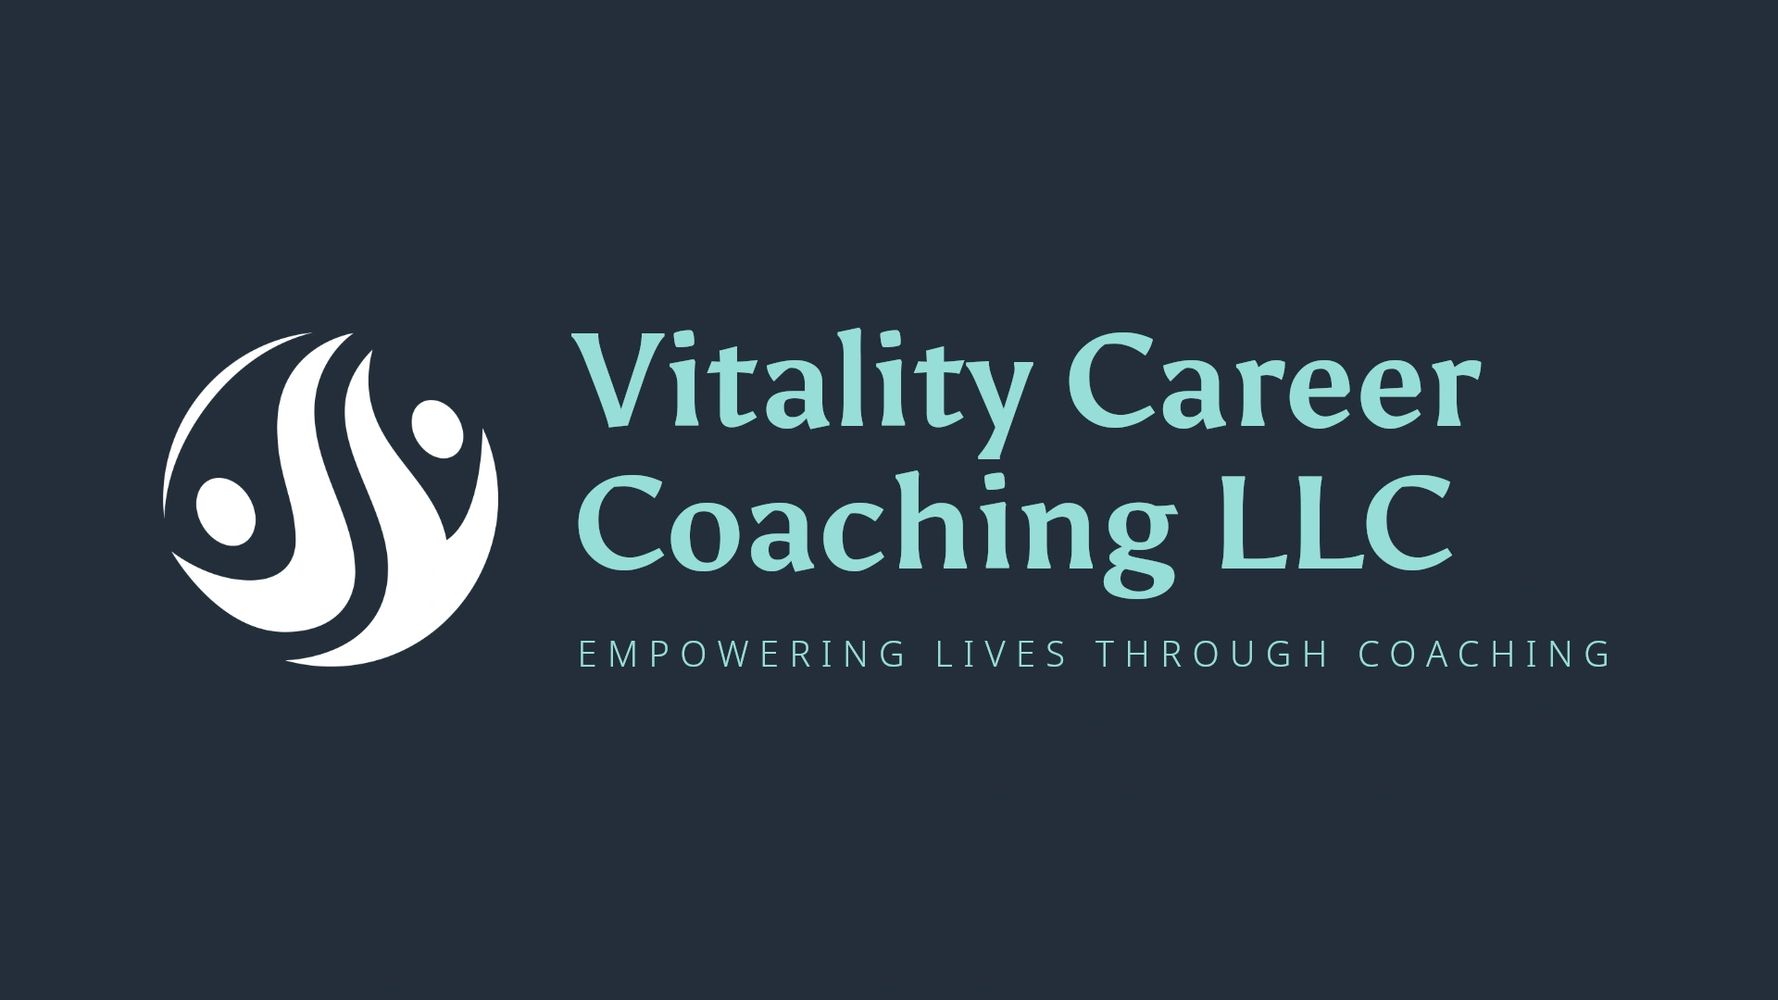 Image of Vitality Career Coaching LLC, Empowering lives through coaching